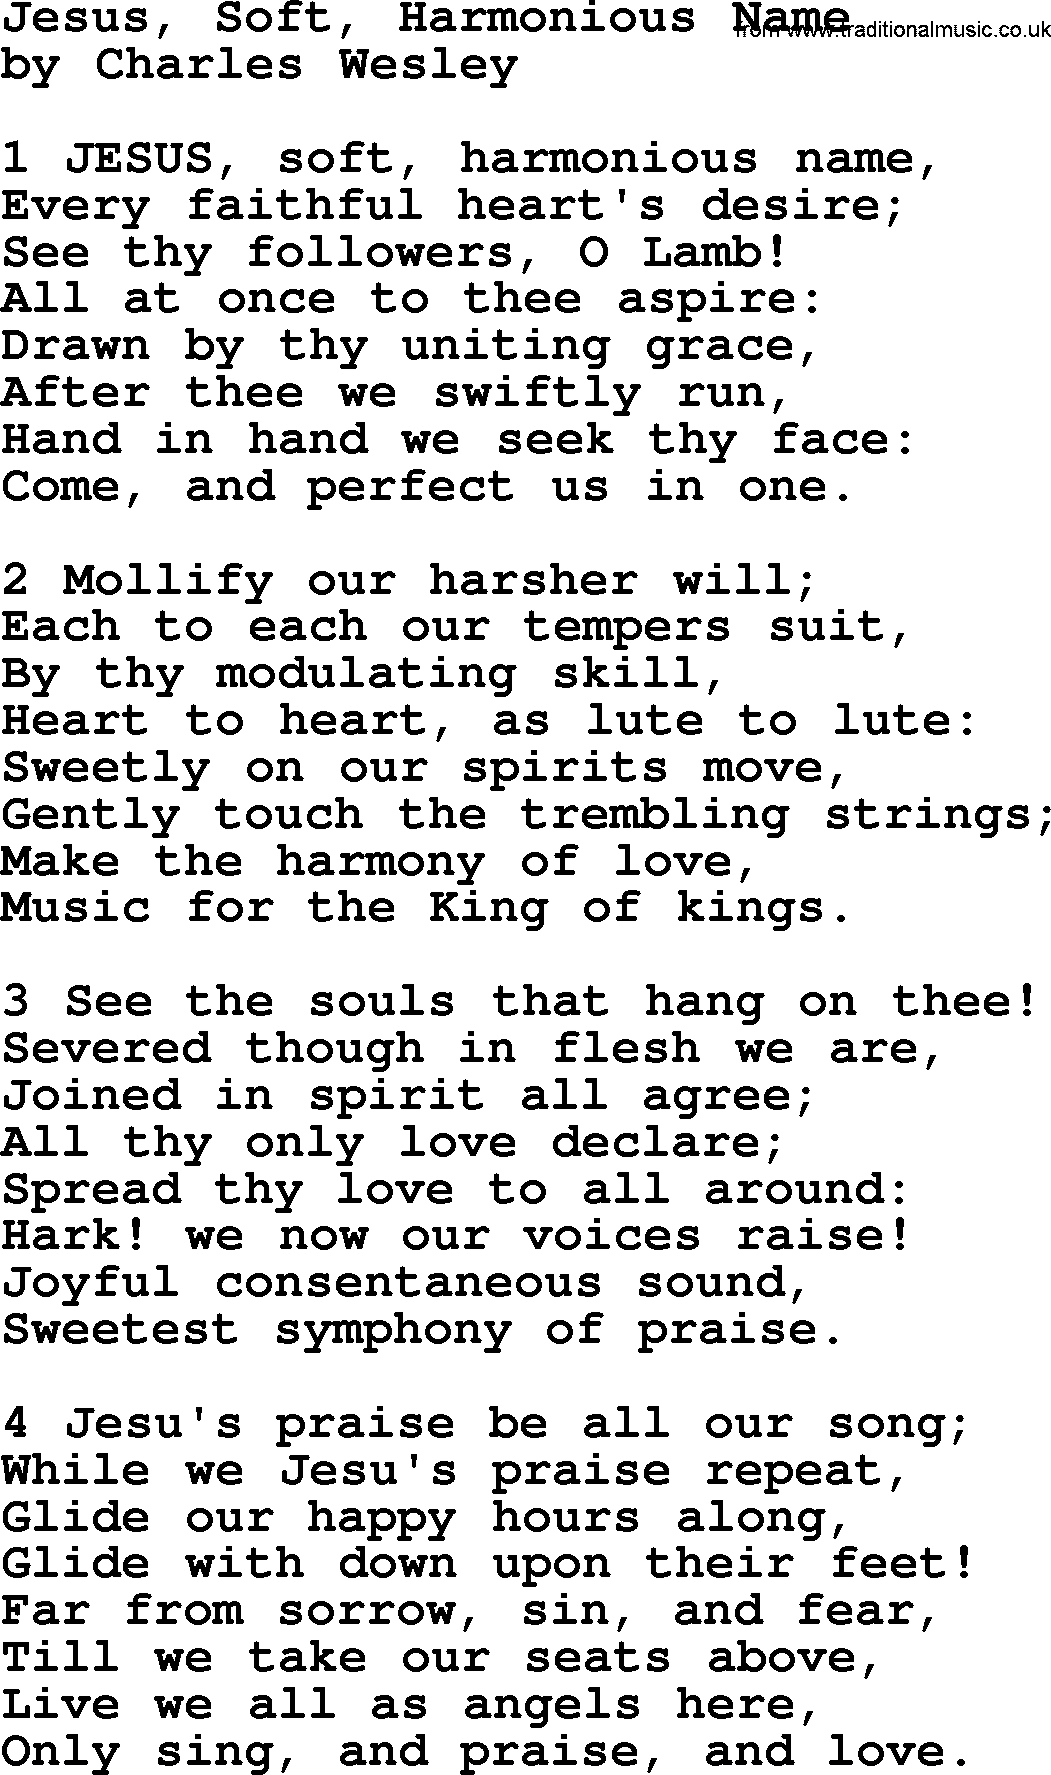 Charles Wesley hymn: Jesus, Soft, Harmonious Name, lyrics